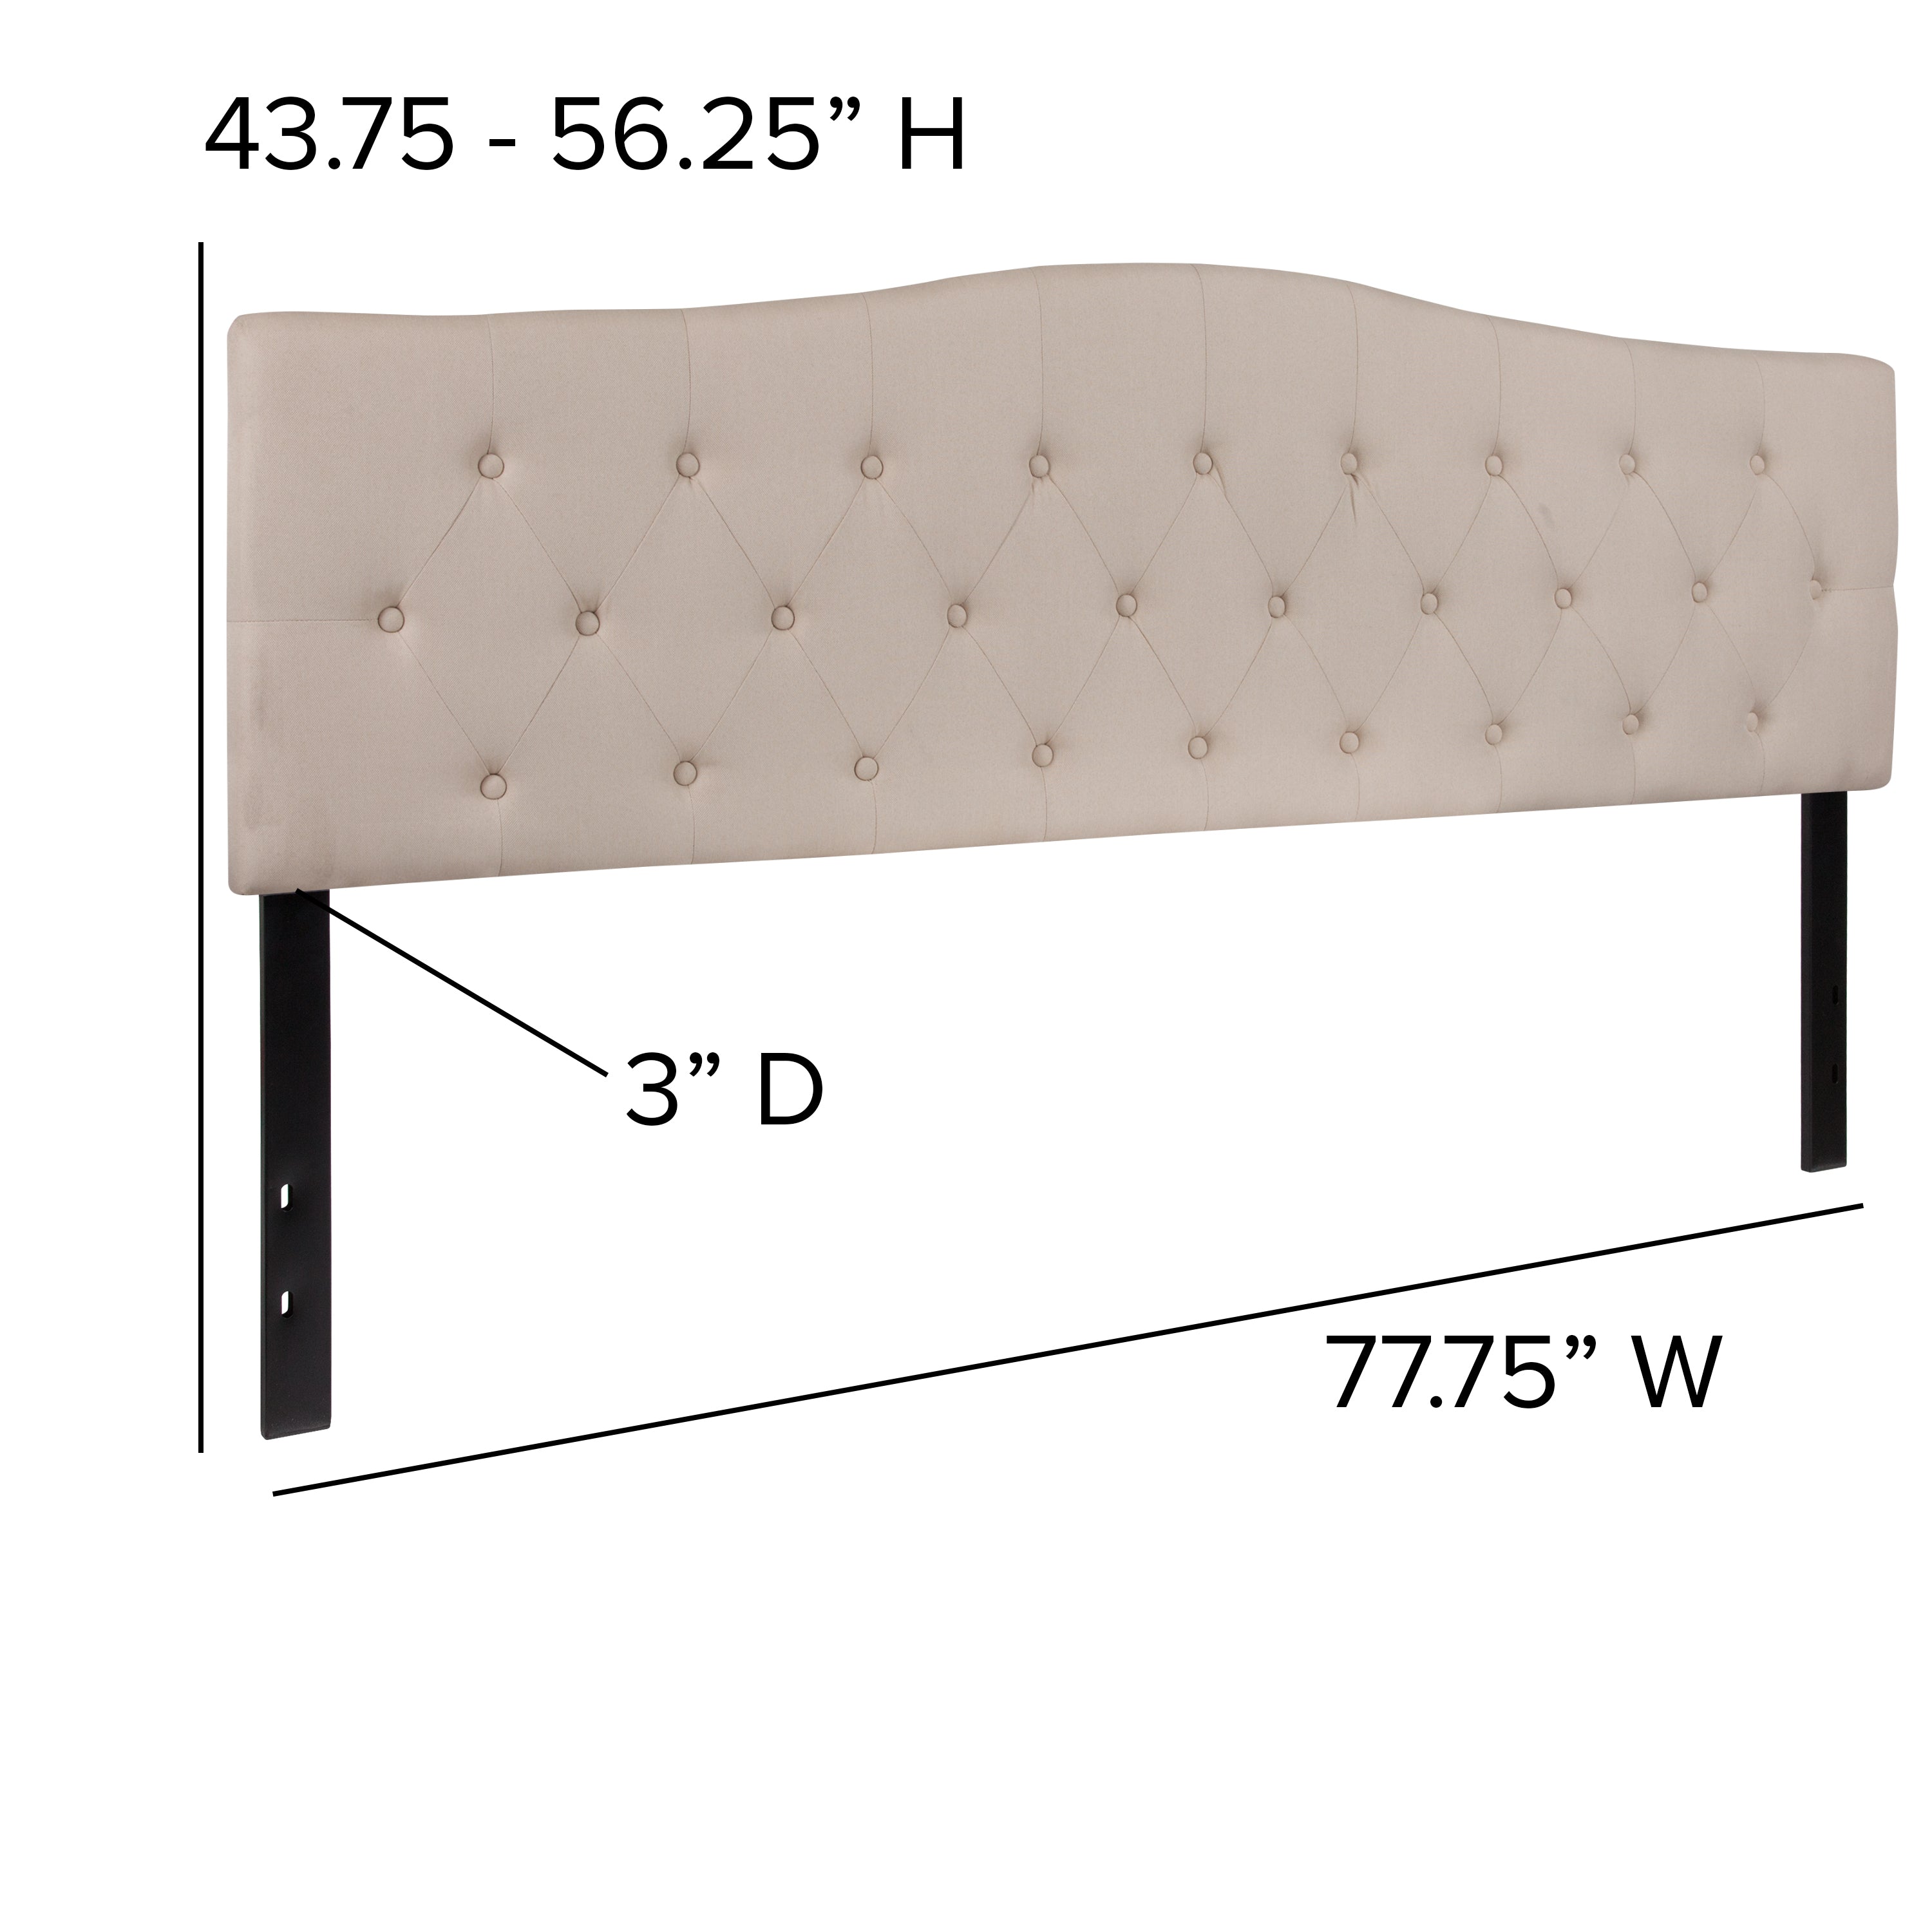 Cambridge Arched Button Tufted Upholstered Headboard-Headboard-Flash Furniture-Wall2Wall Furnishings